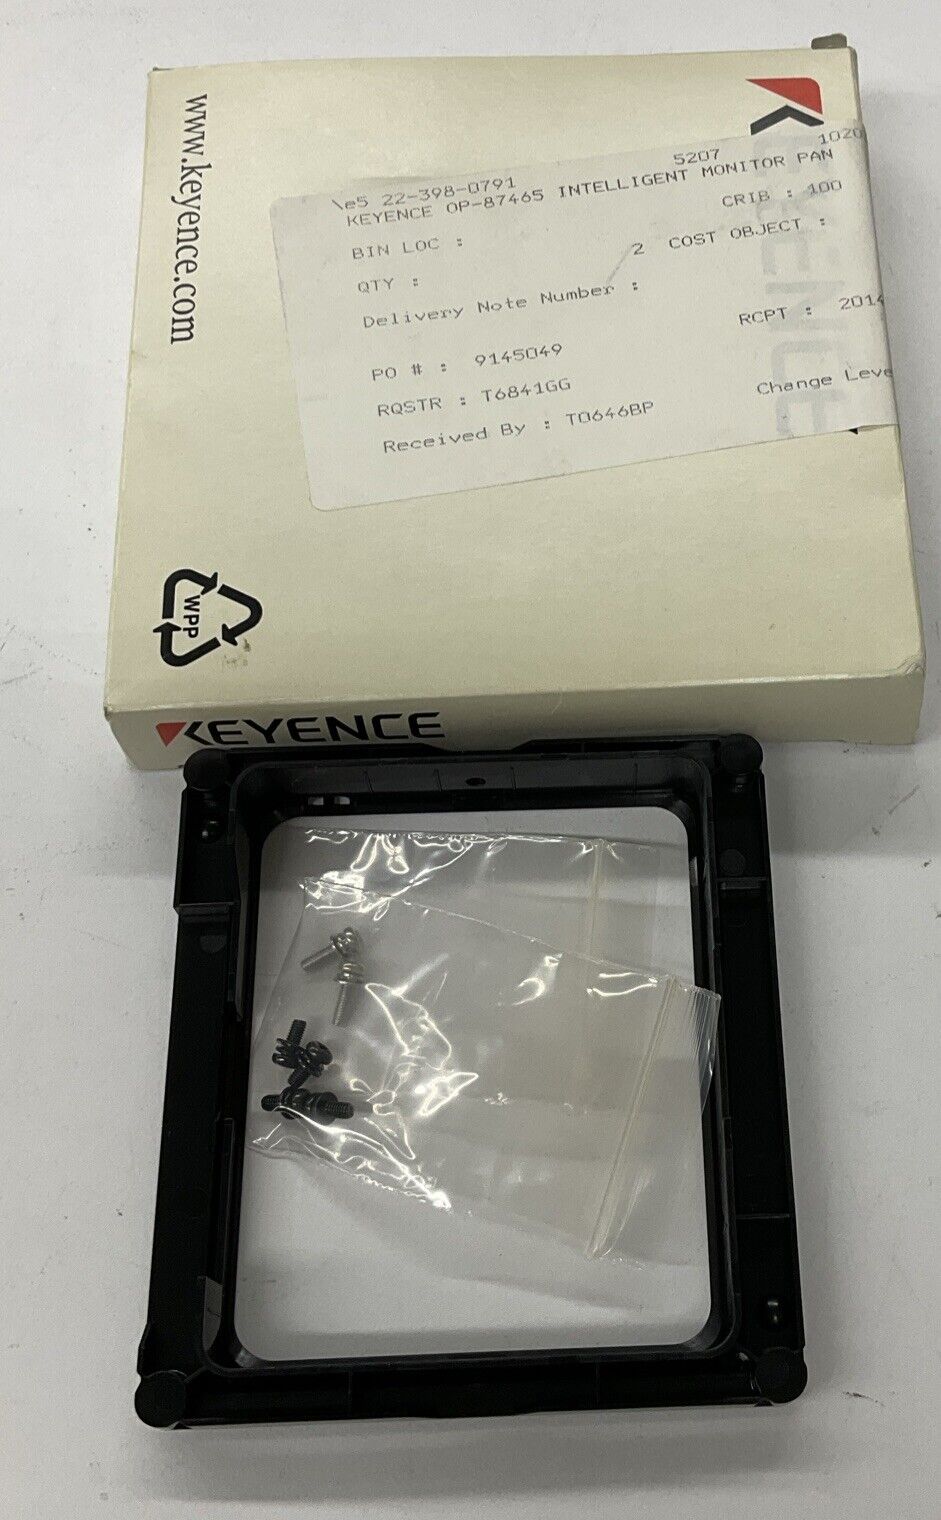 Keyence OP-87465 Panel Mounting Adapter (CL338)